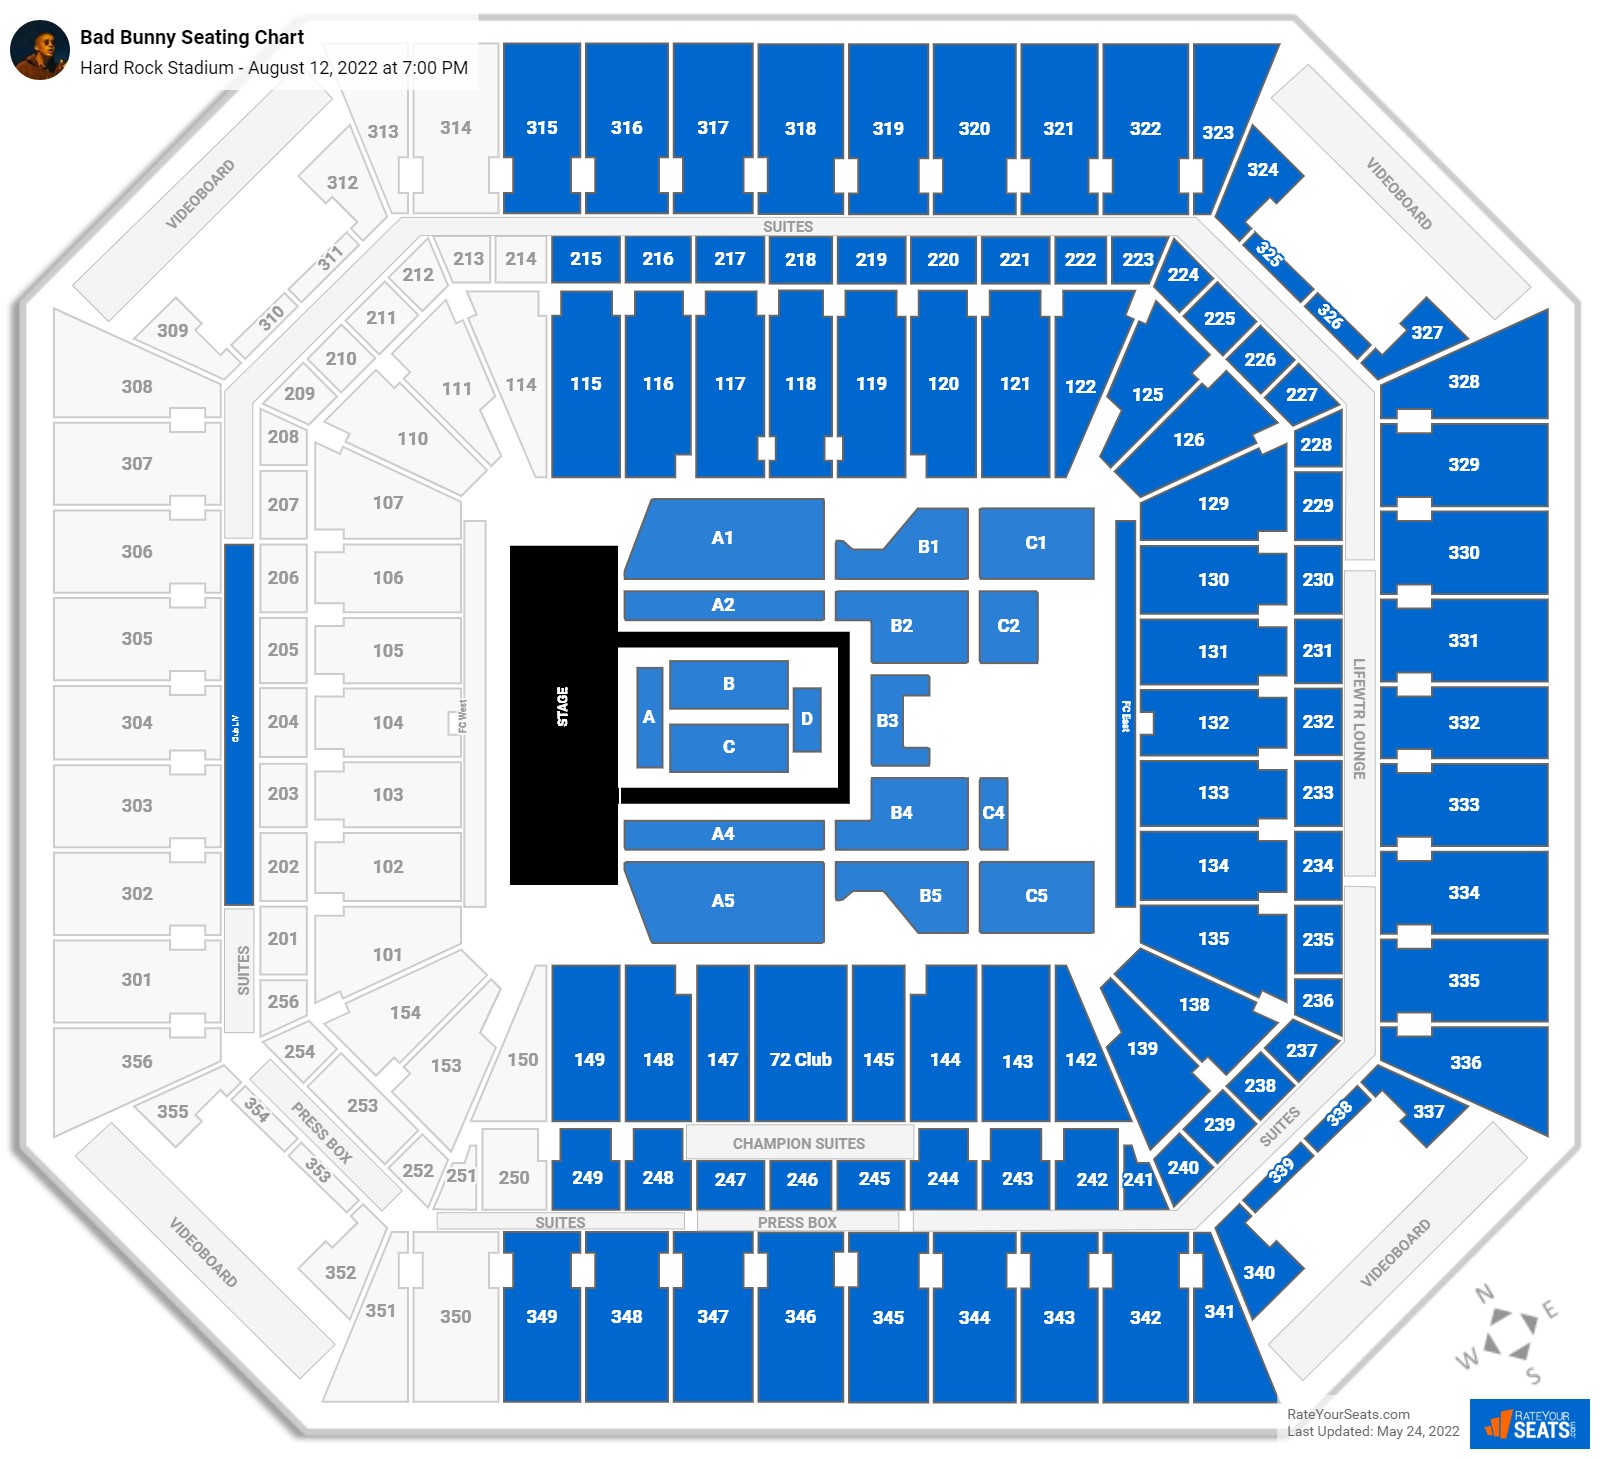 Hard Rock Stadium Concert Seating Chart - RateYourSeats.com